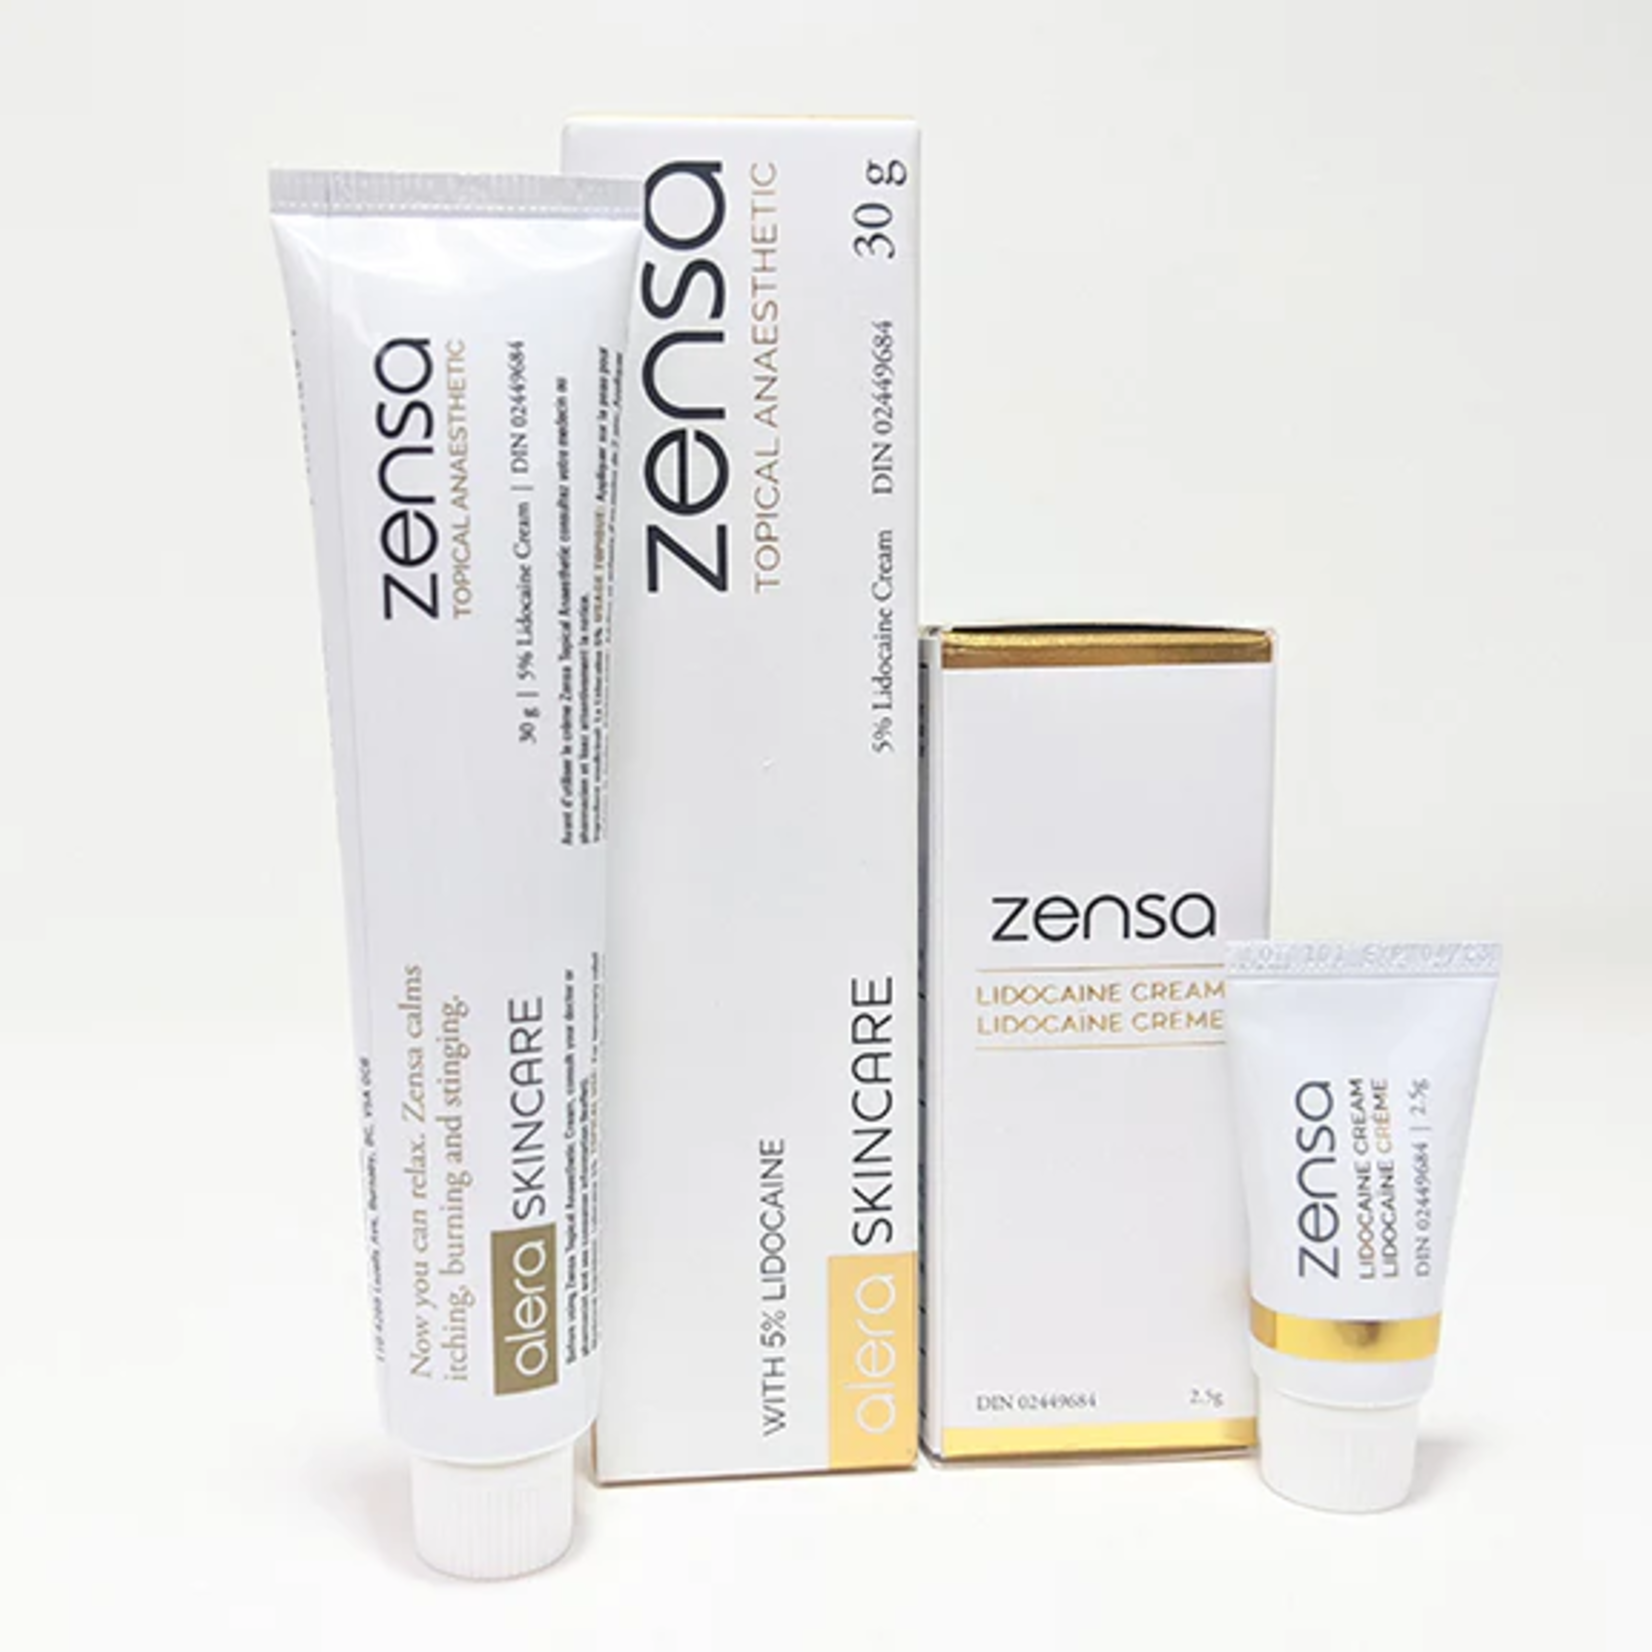 Zensa shop UAE  Buy Zensa products online in Dubai  Whizzae